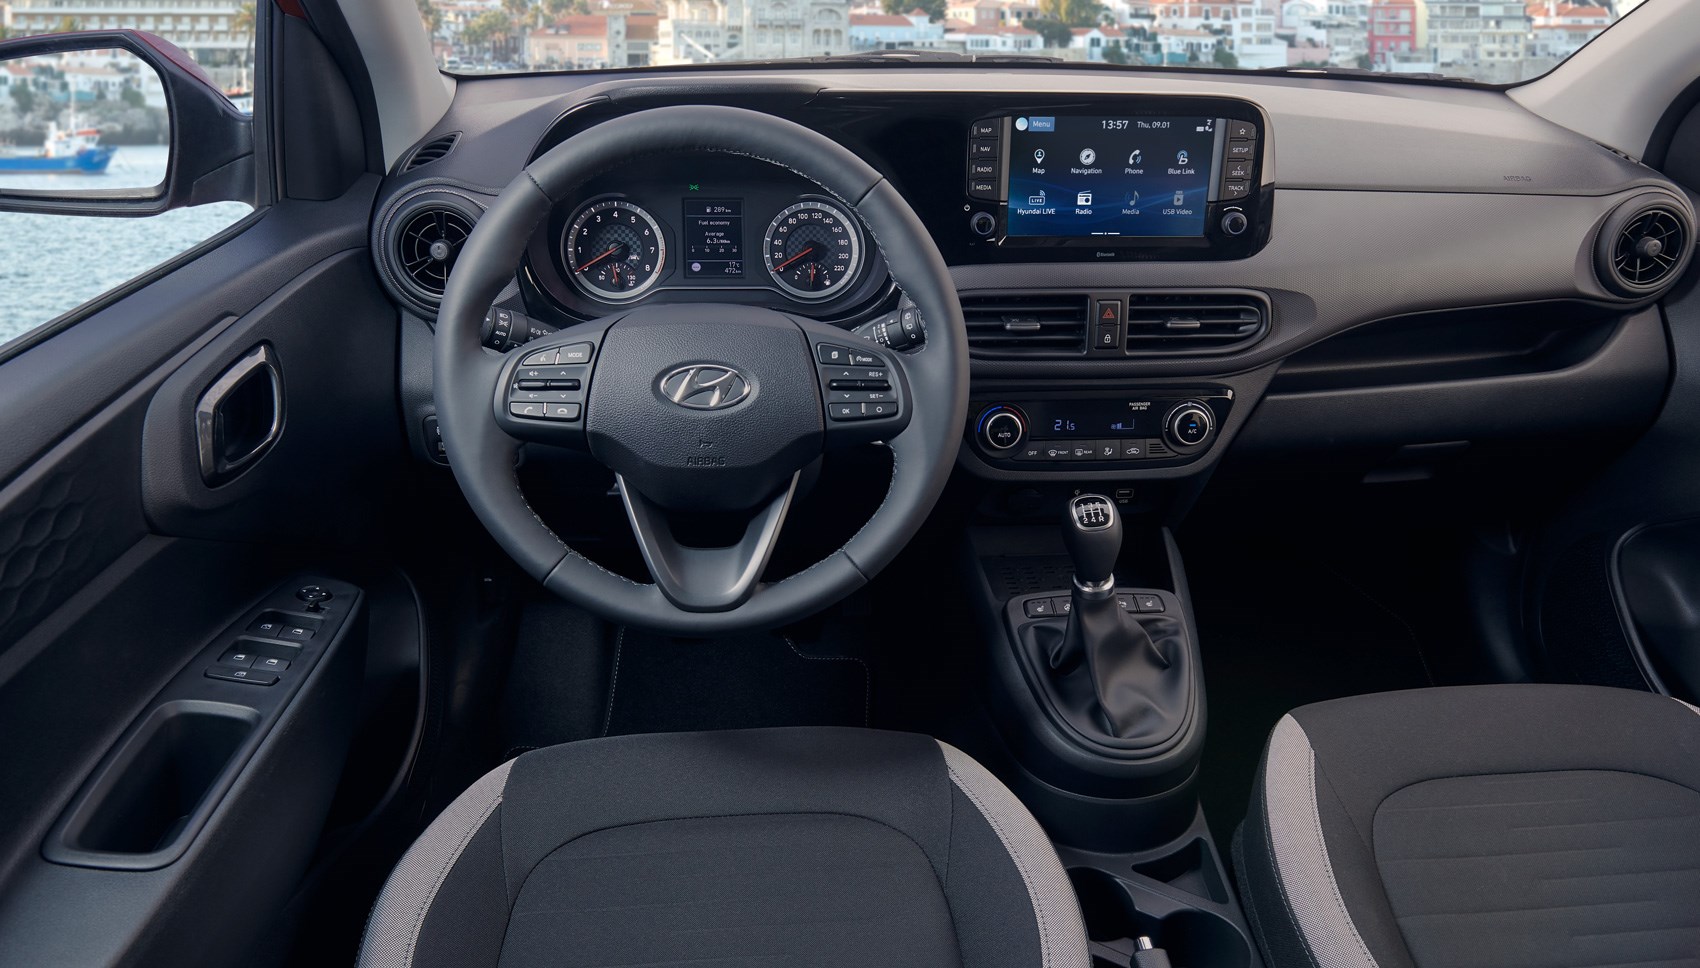 Hyundai i10 (2020) review: diminishing returns